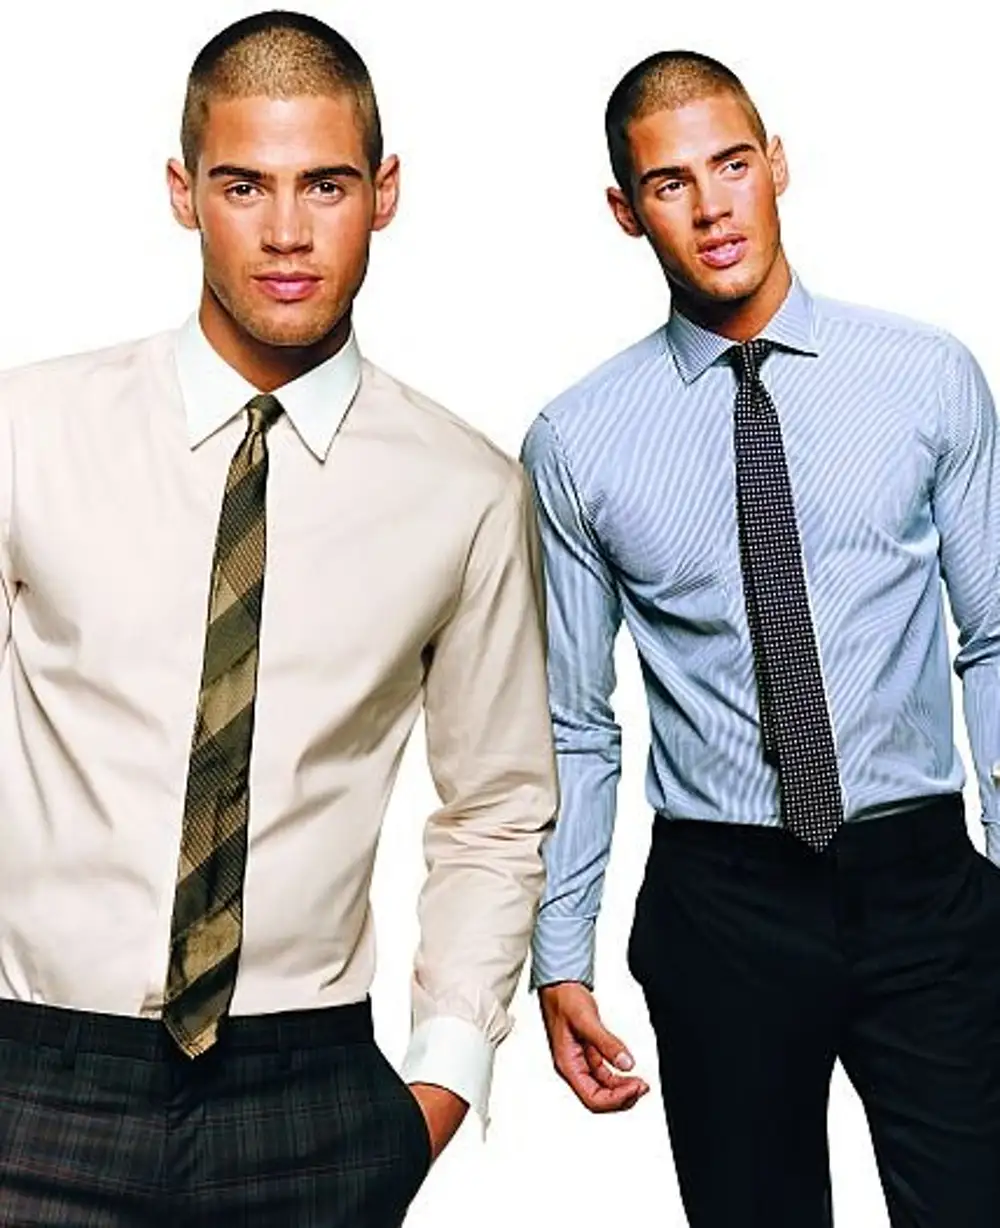 Длина галстука у мужчины